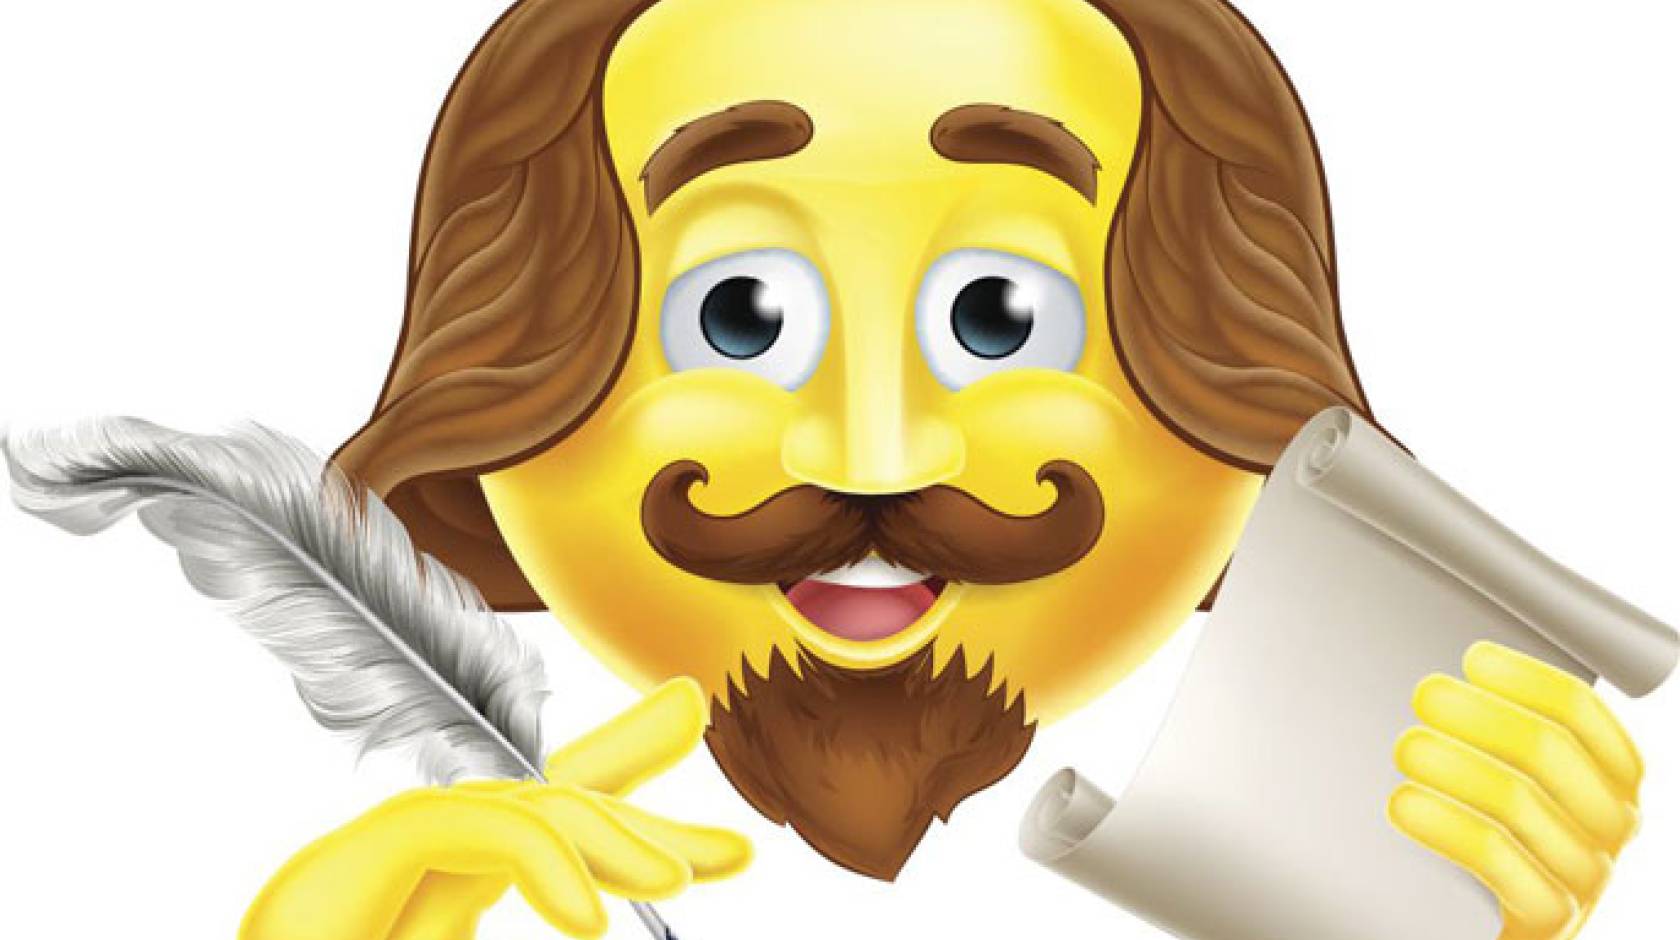 Shakespeare in emoji form